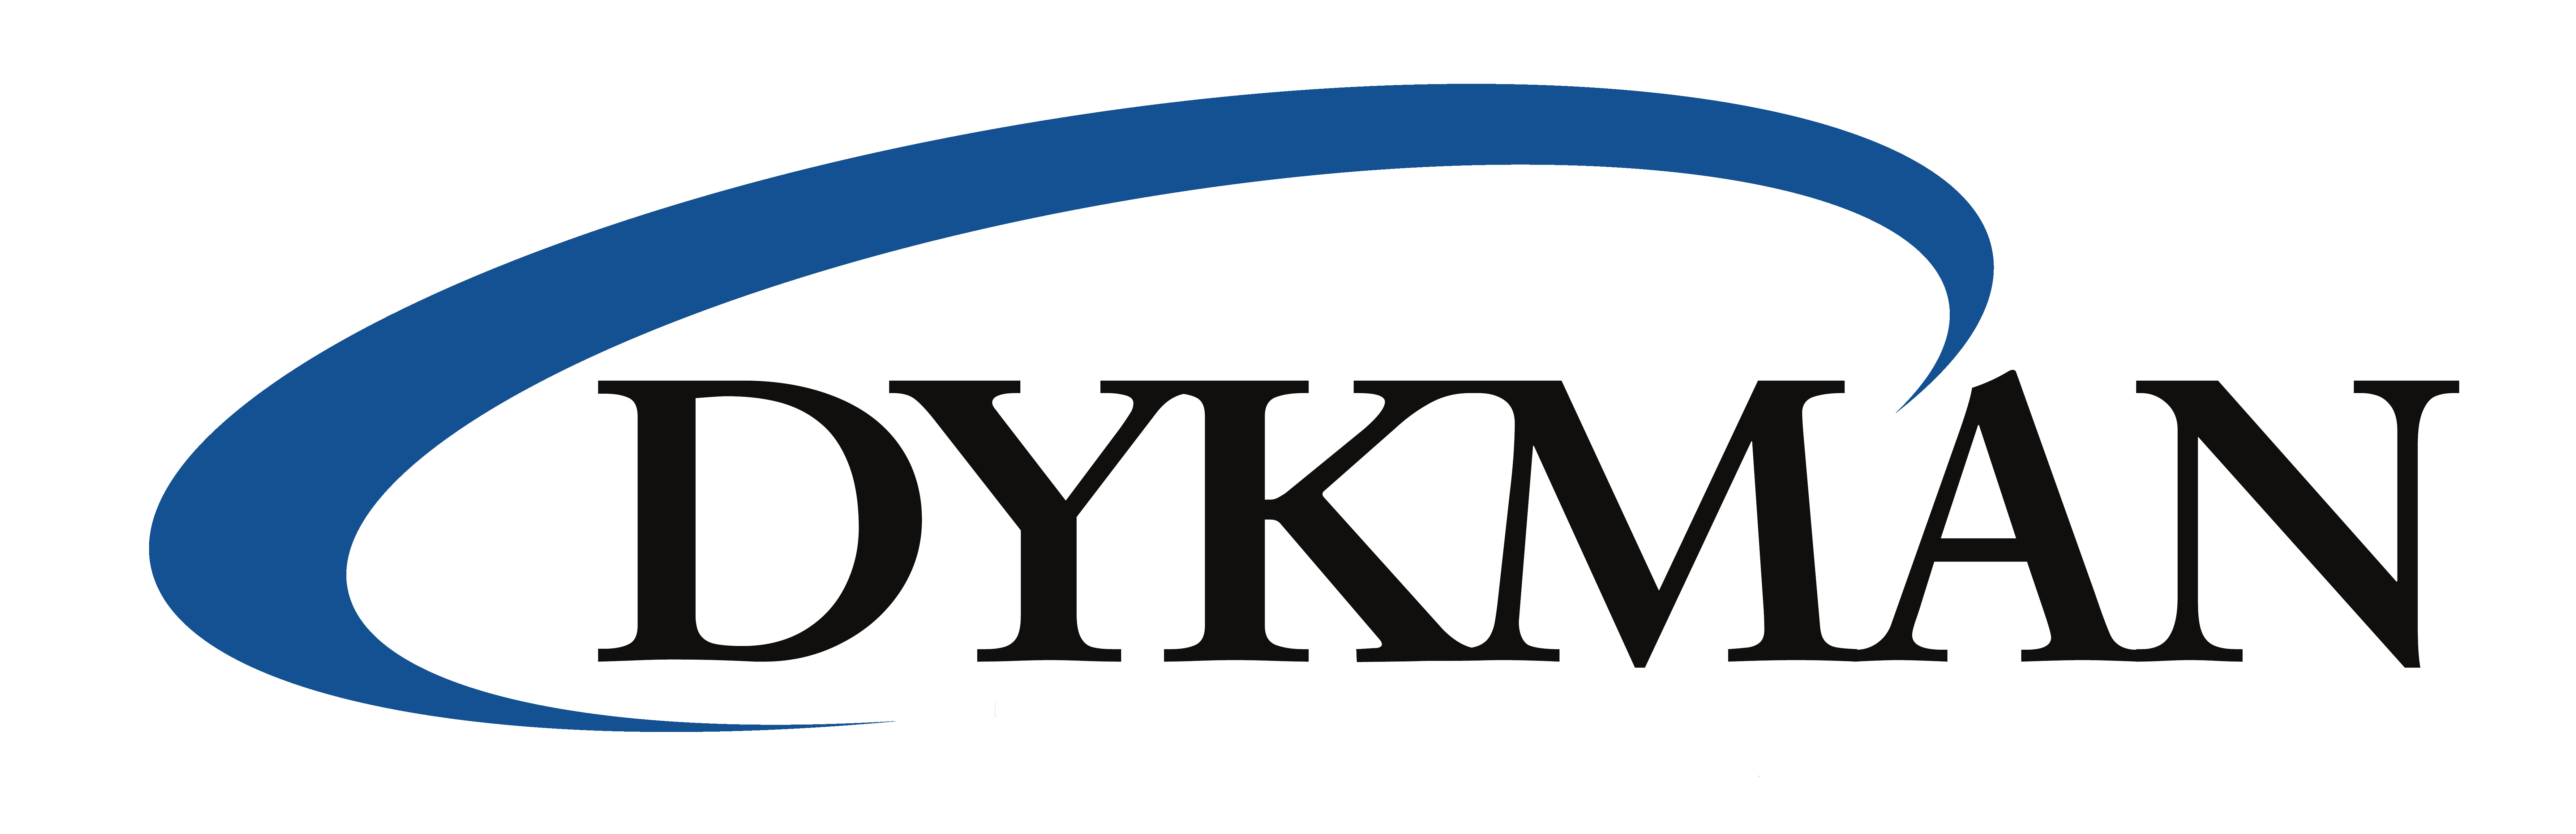 Dykman Electrical, Inc.